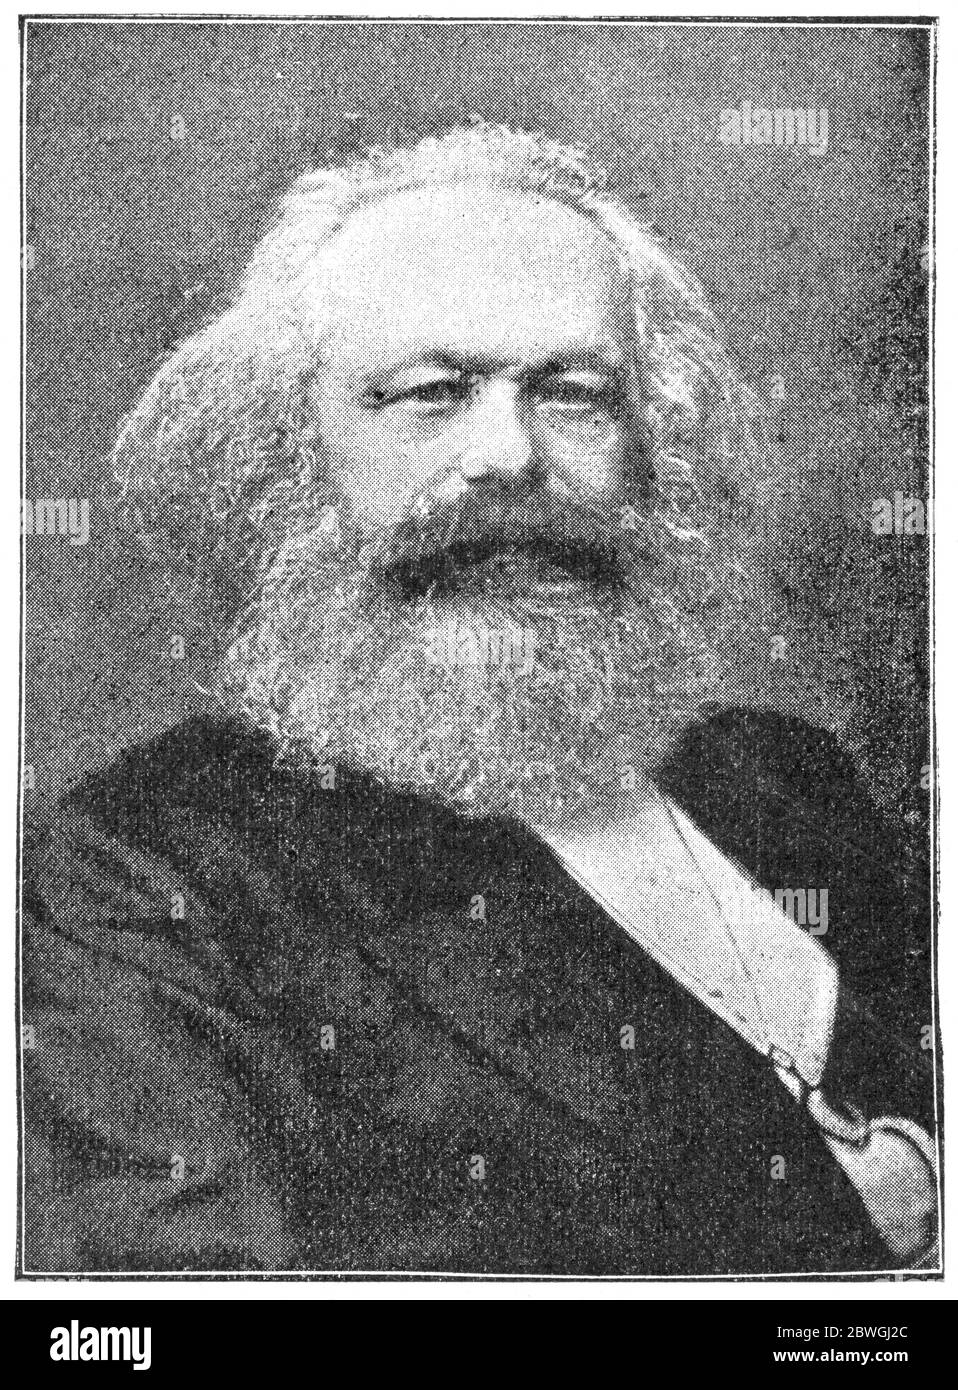 Portrait of Karl Marx - a German philosopher, economist, historian, sociologist, political theorist, journalist and socialist revolutionary. Stock Photo